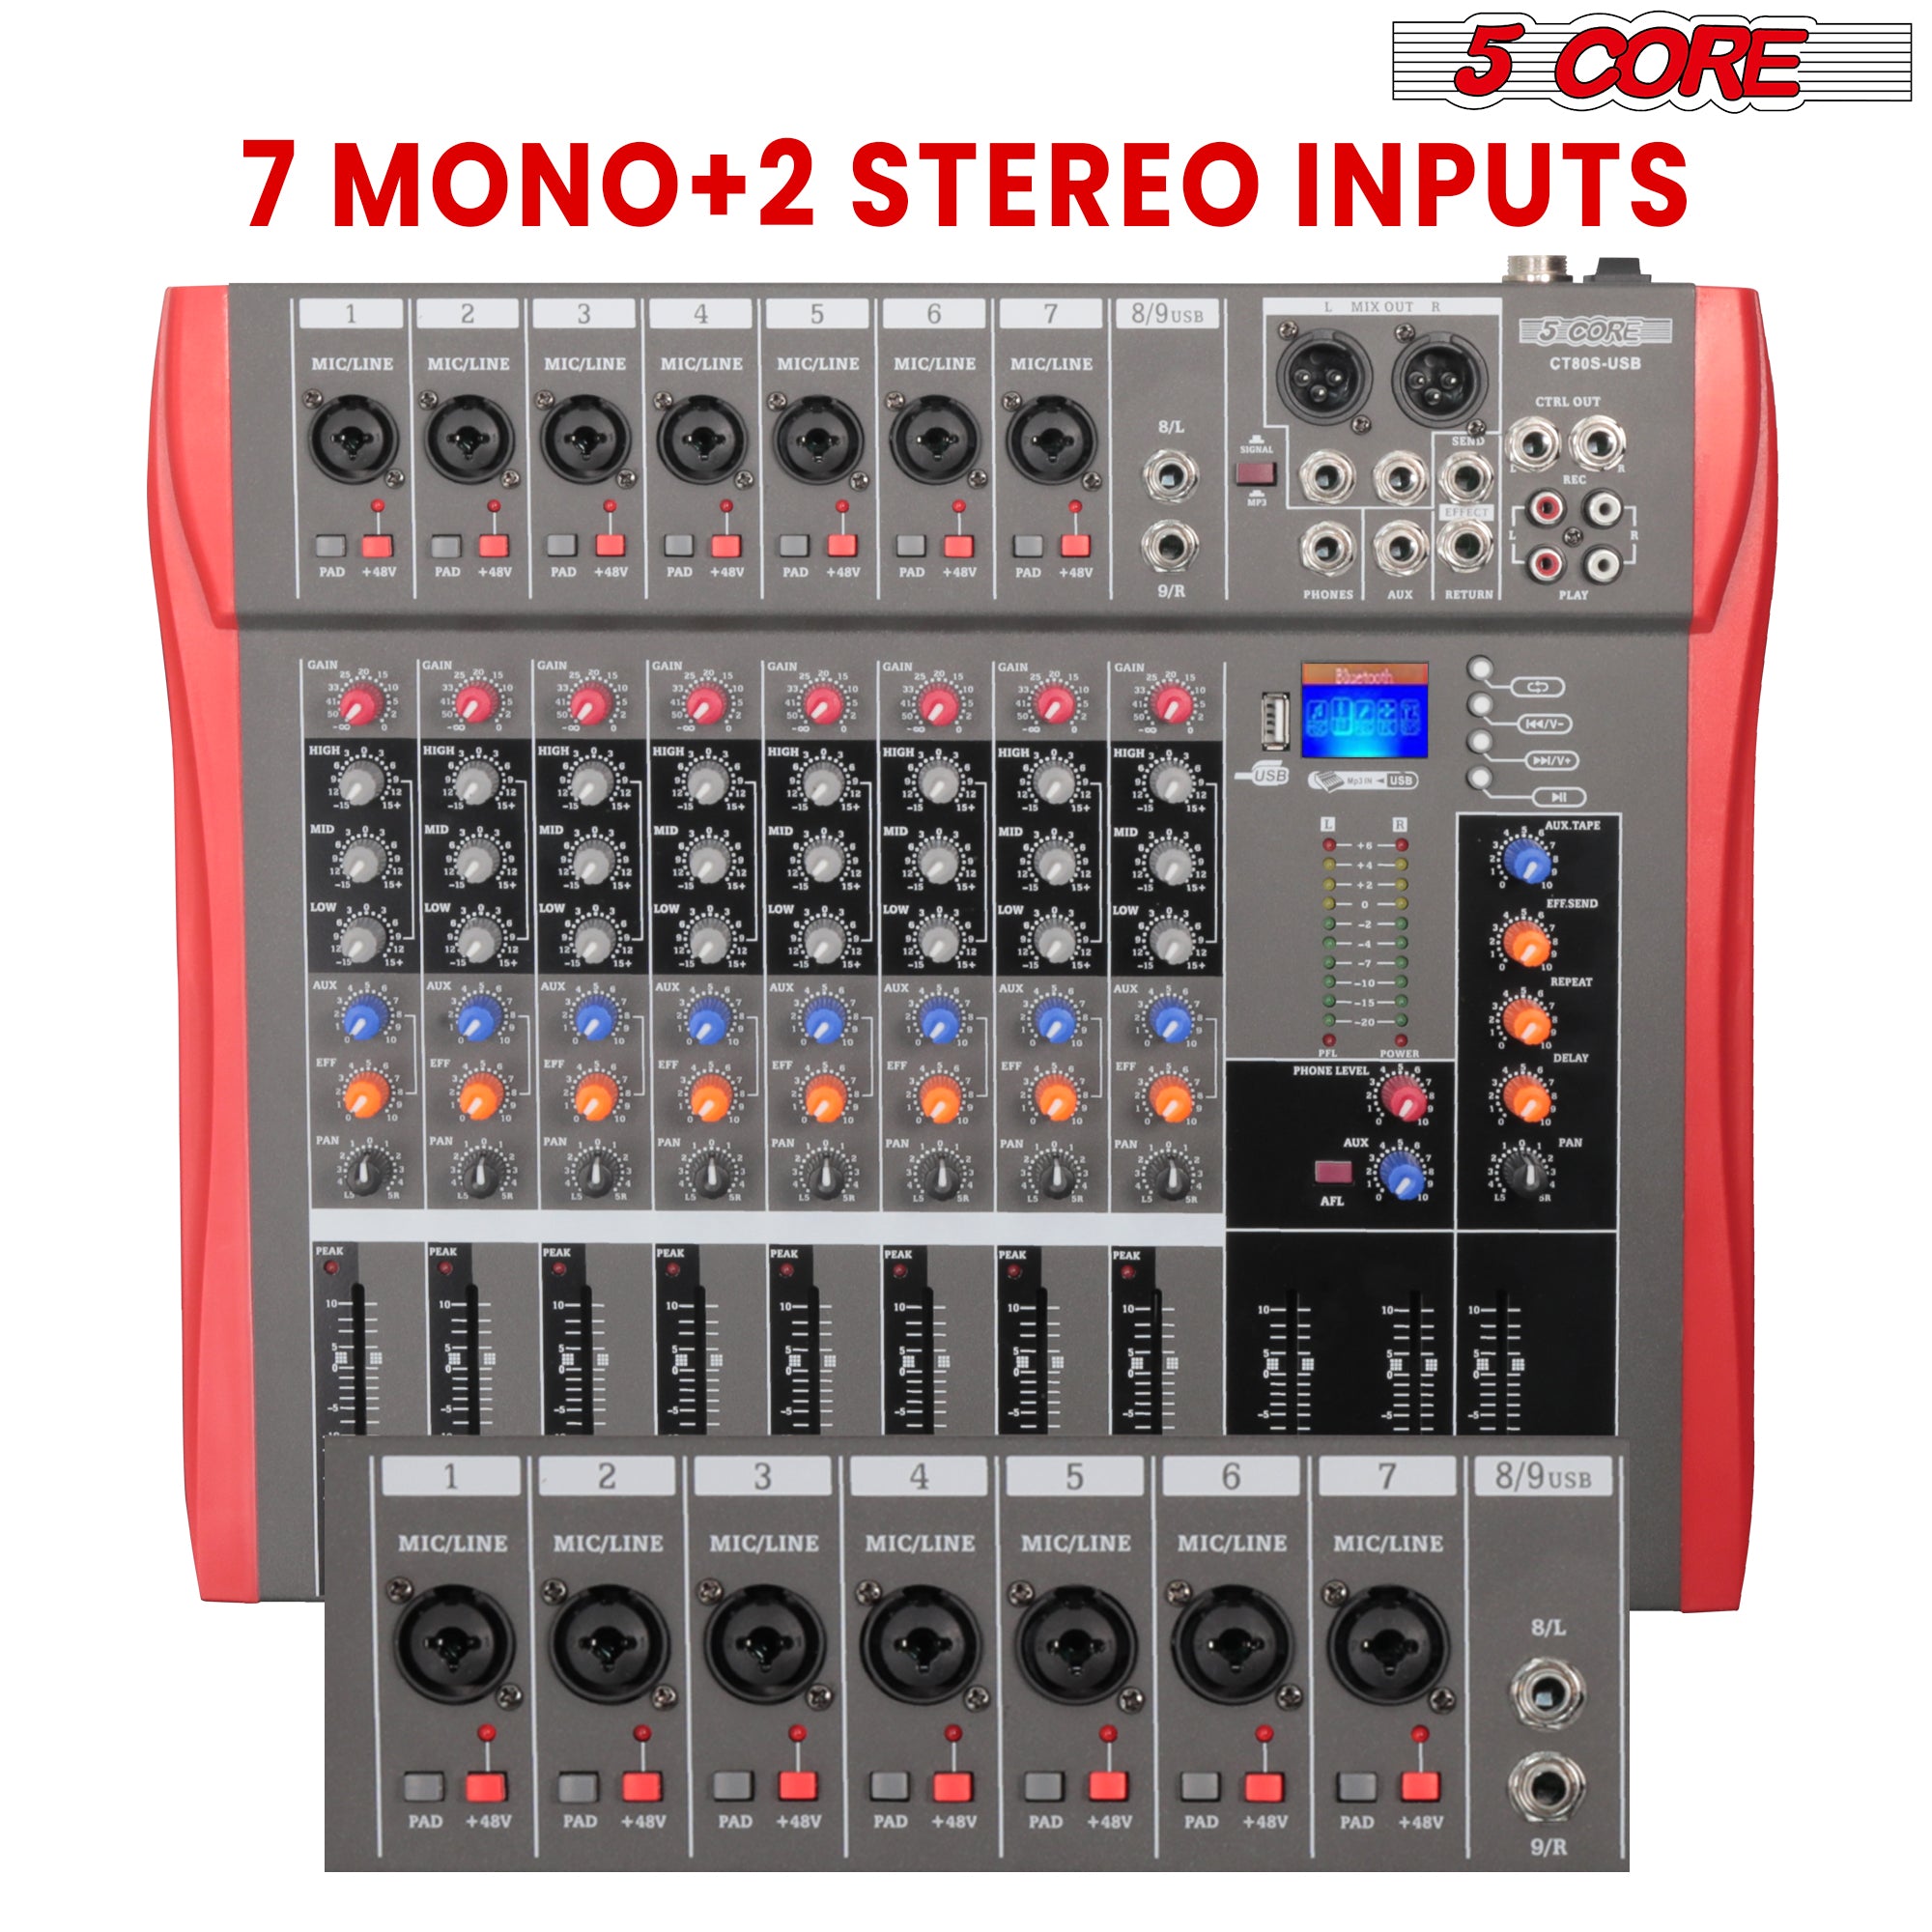 Dj mixer has 7 Mono + 2 Stereo Inputs.